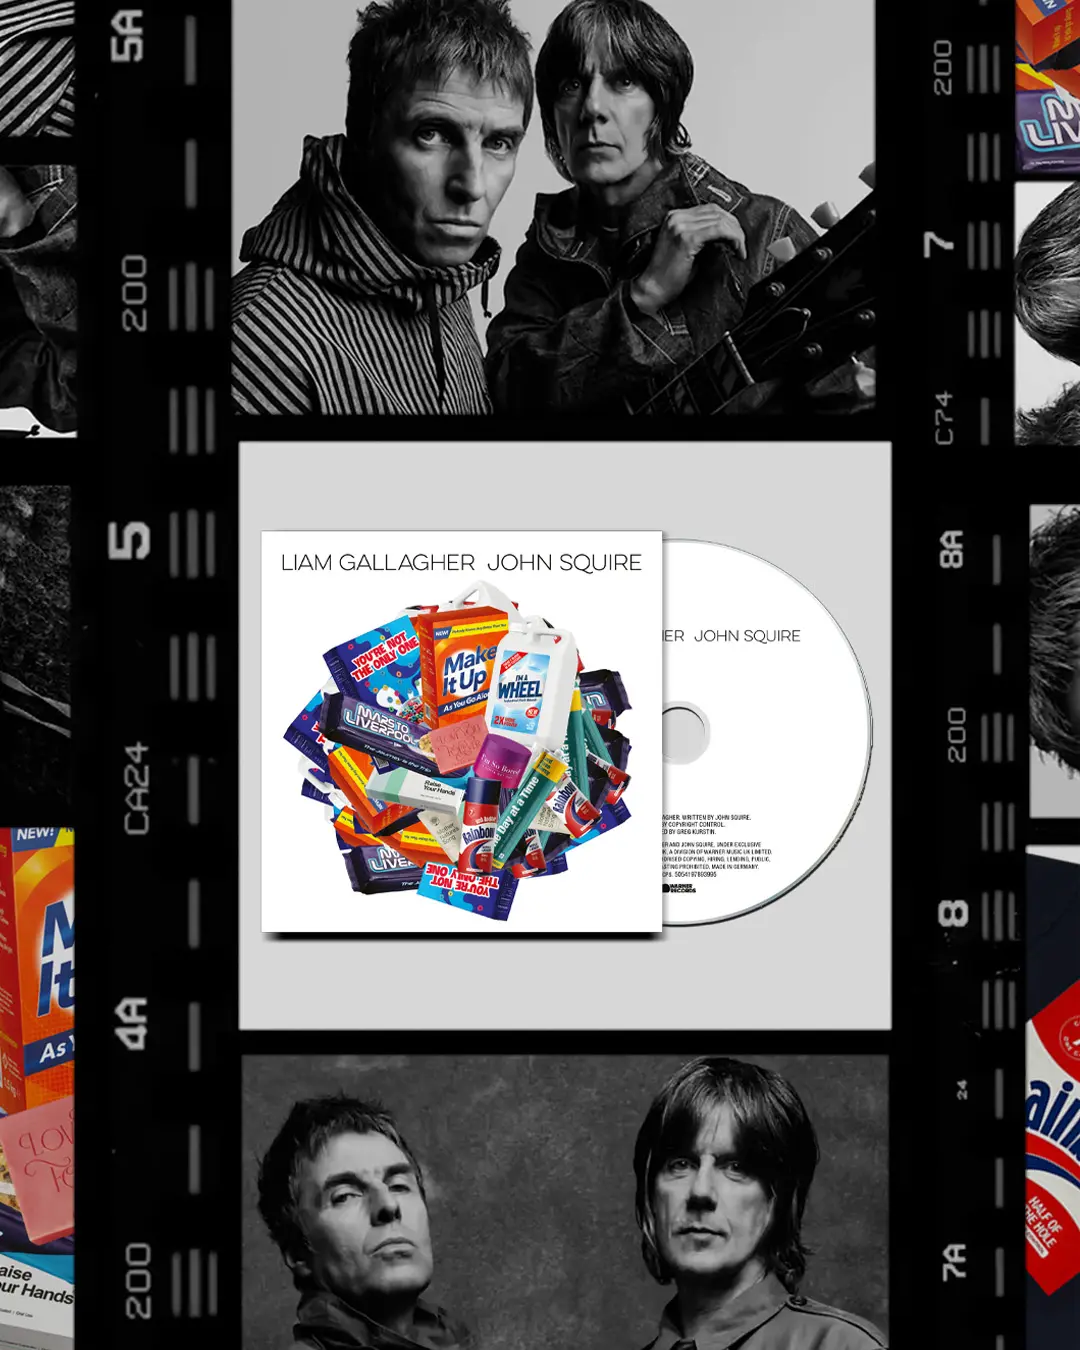 Liam Gallagher John Squire Album Cover | Andy Warhol Pop Art Influence (Credit: Liam Gallagher Facebook)